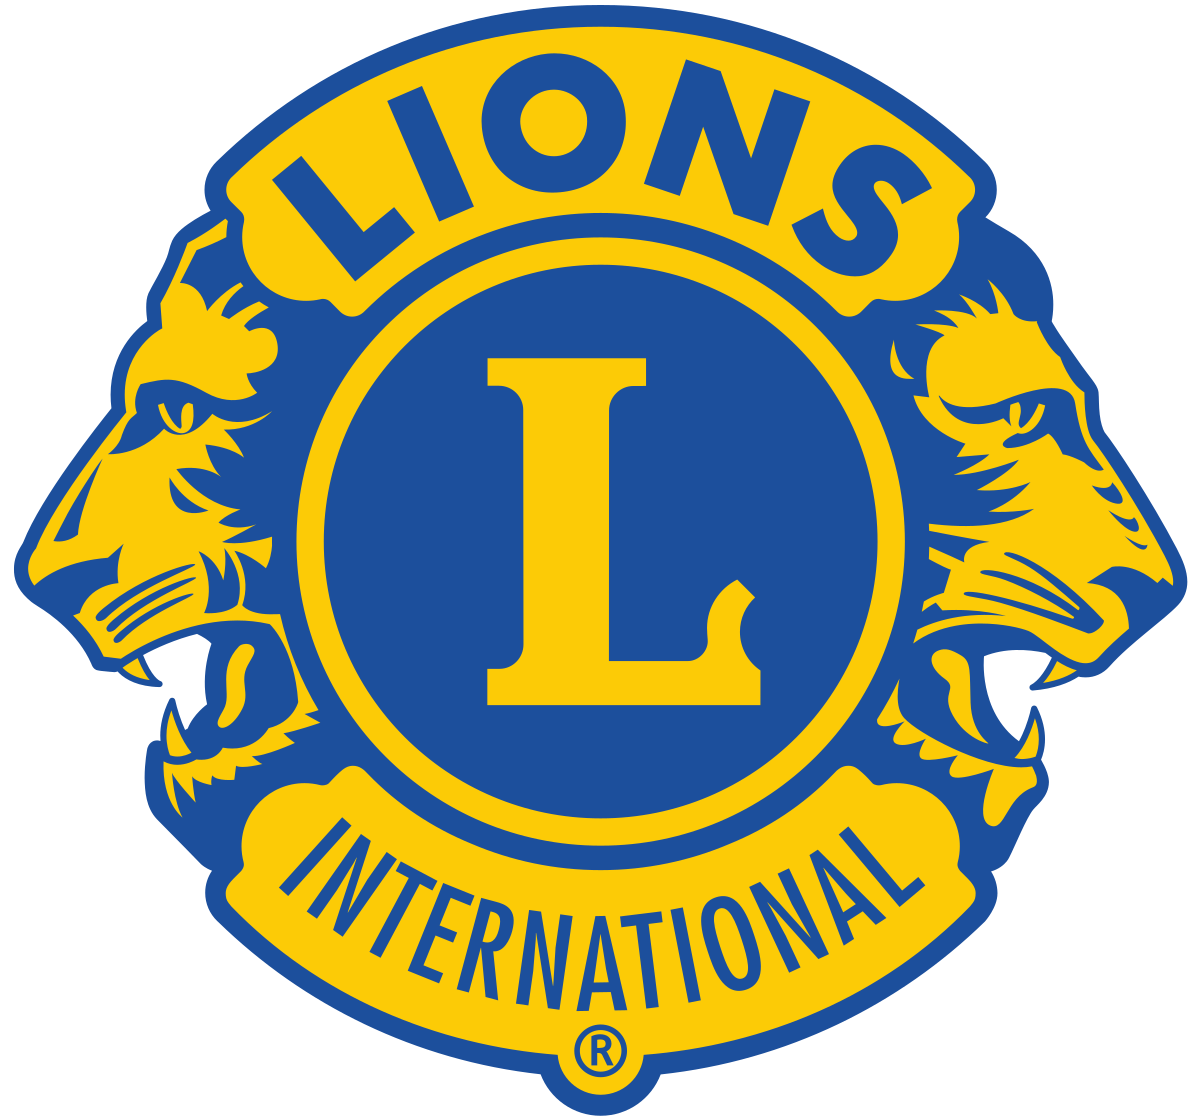 Ross-on-Wye Lions Club